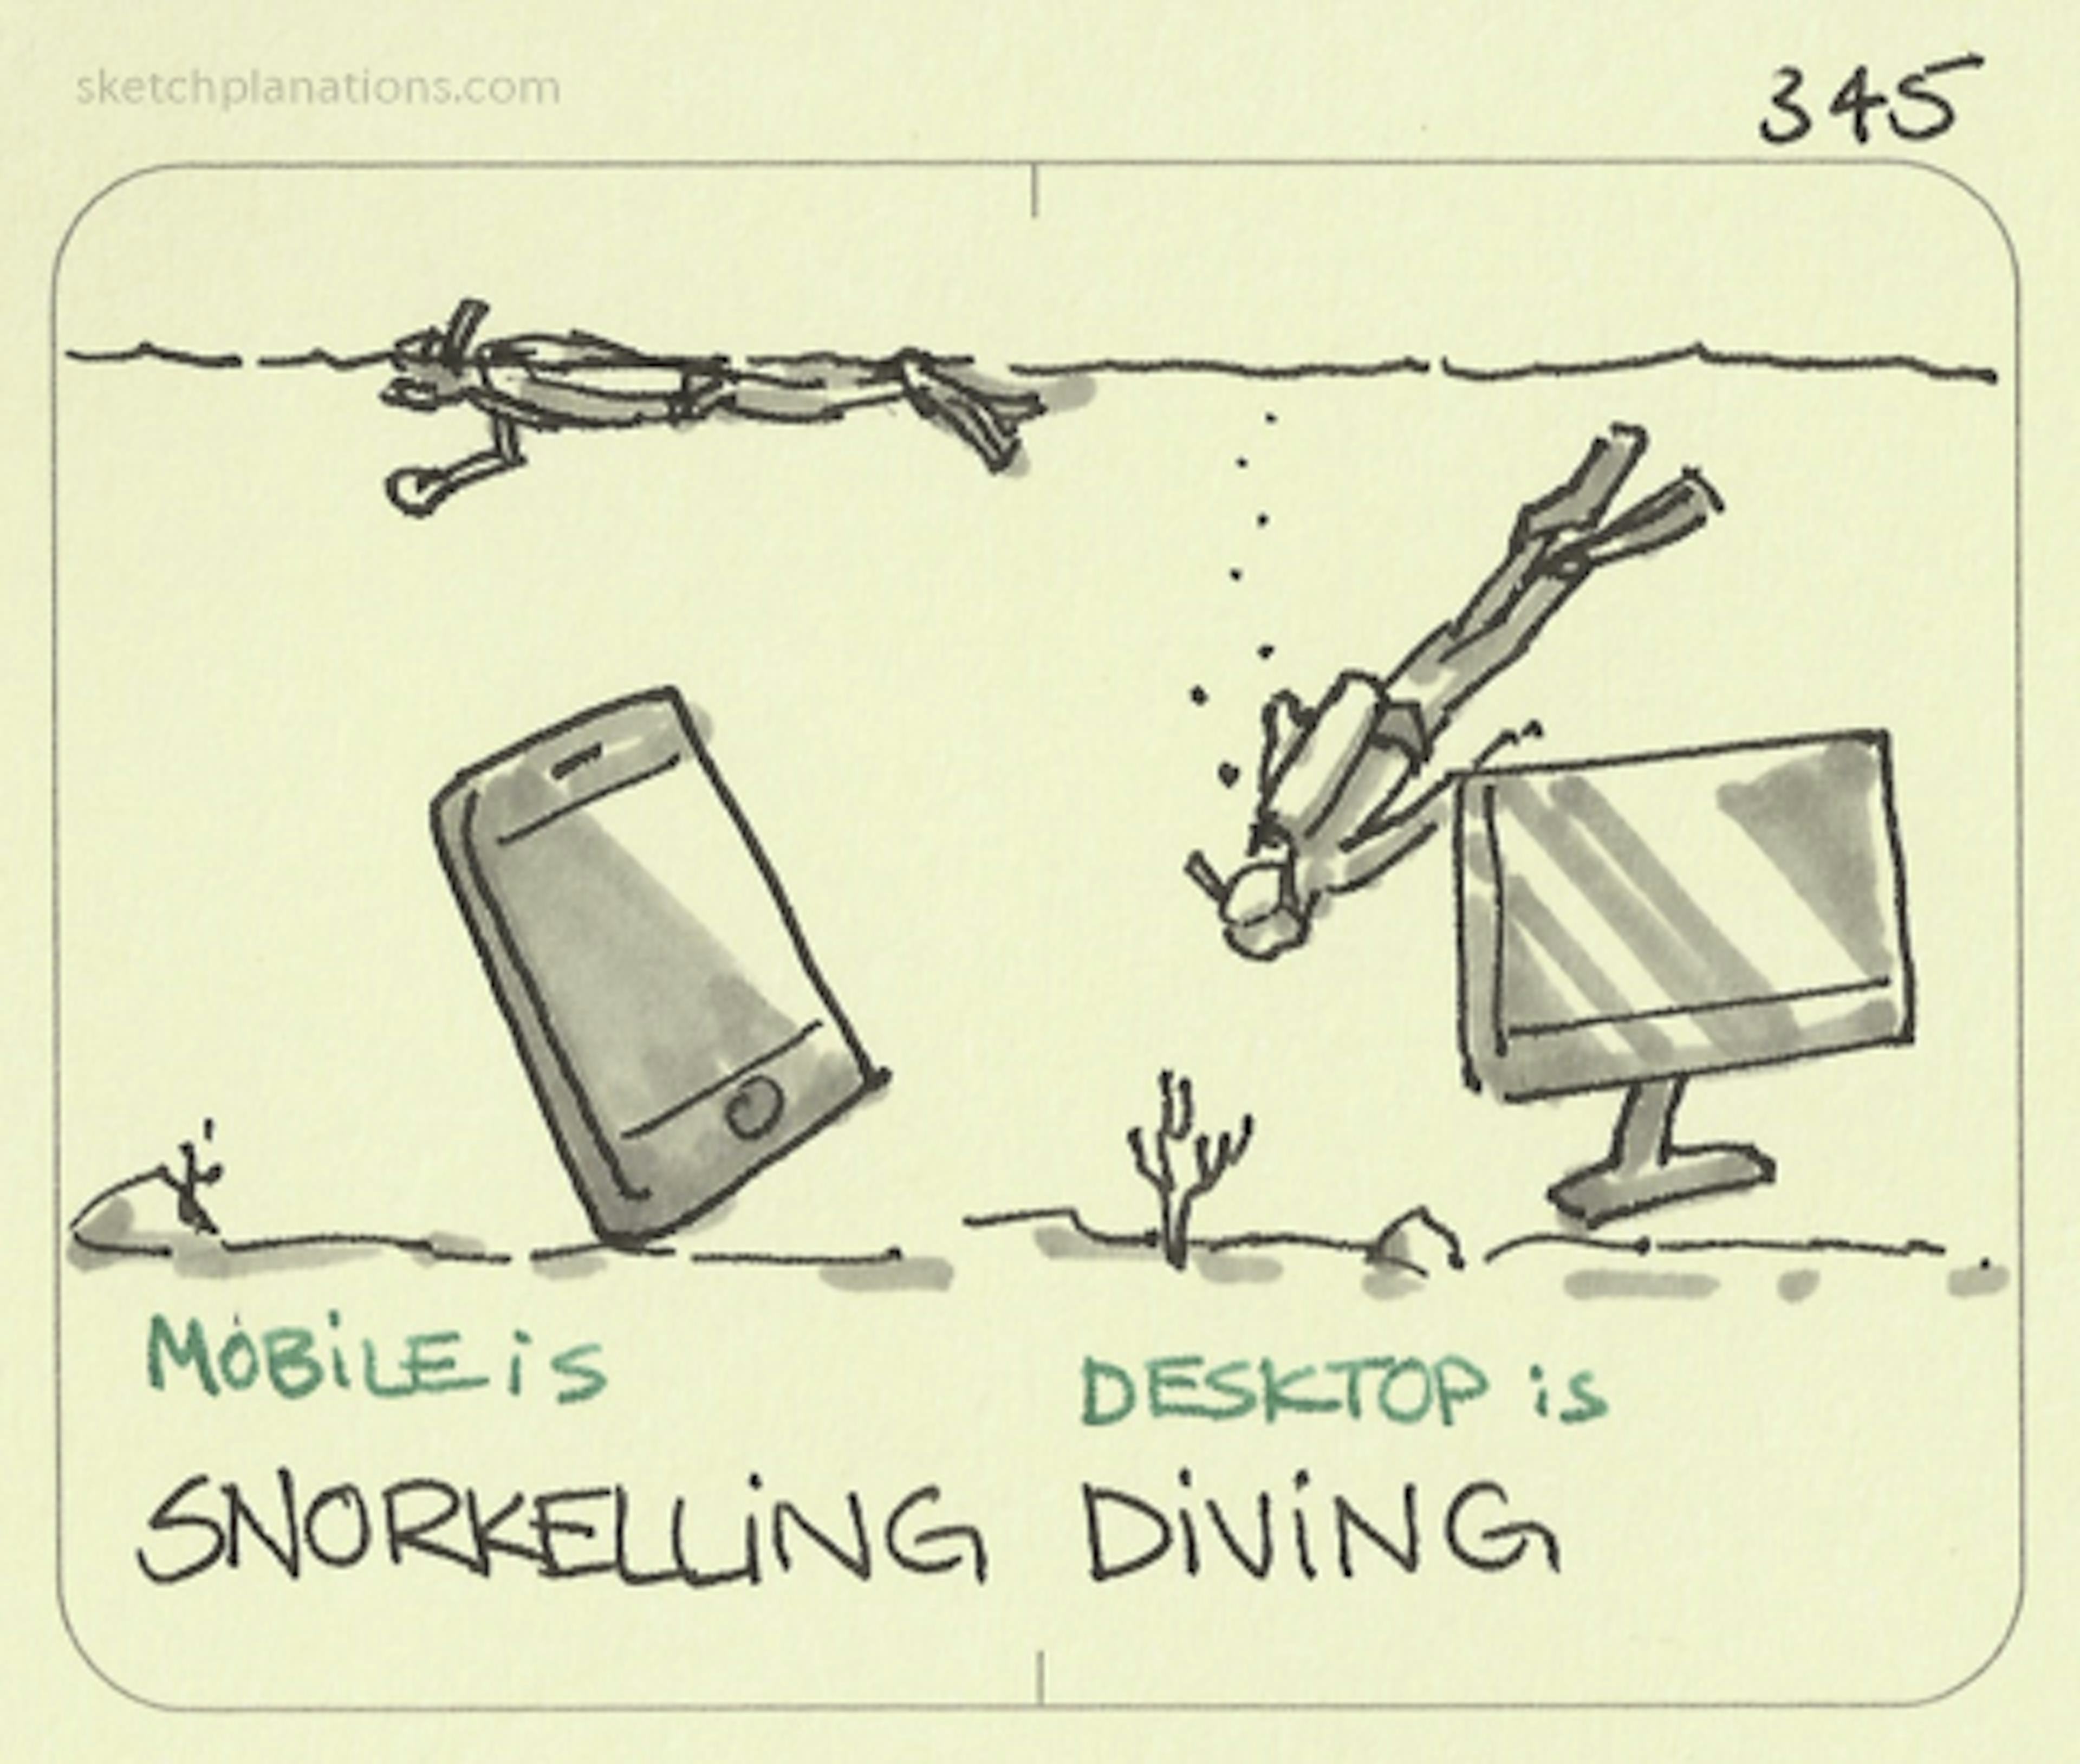 Mobile is snorkelling. Desktop is diving - Sketchplanations